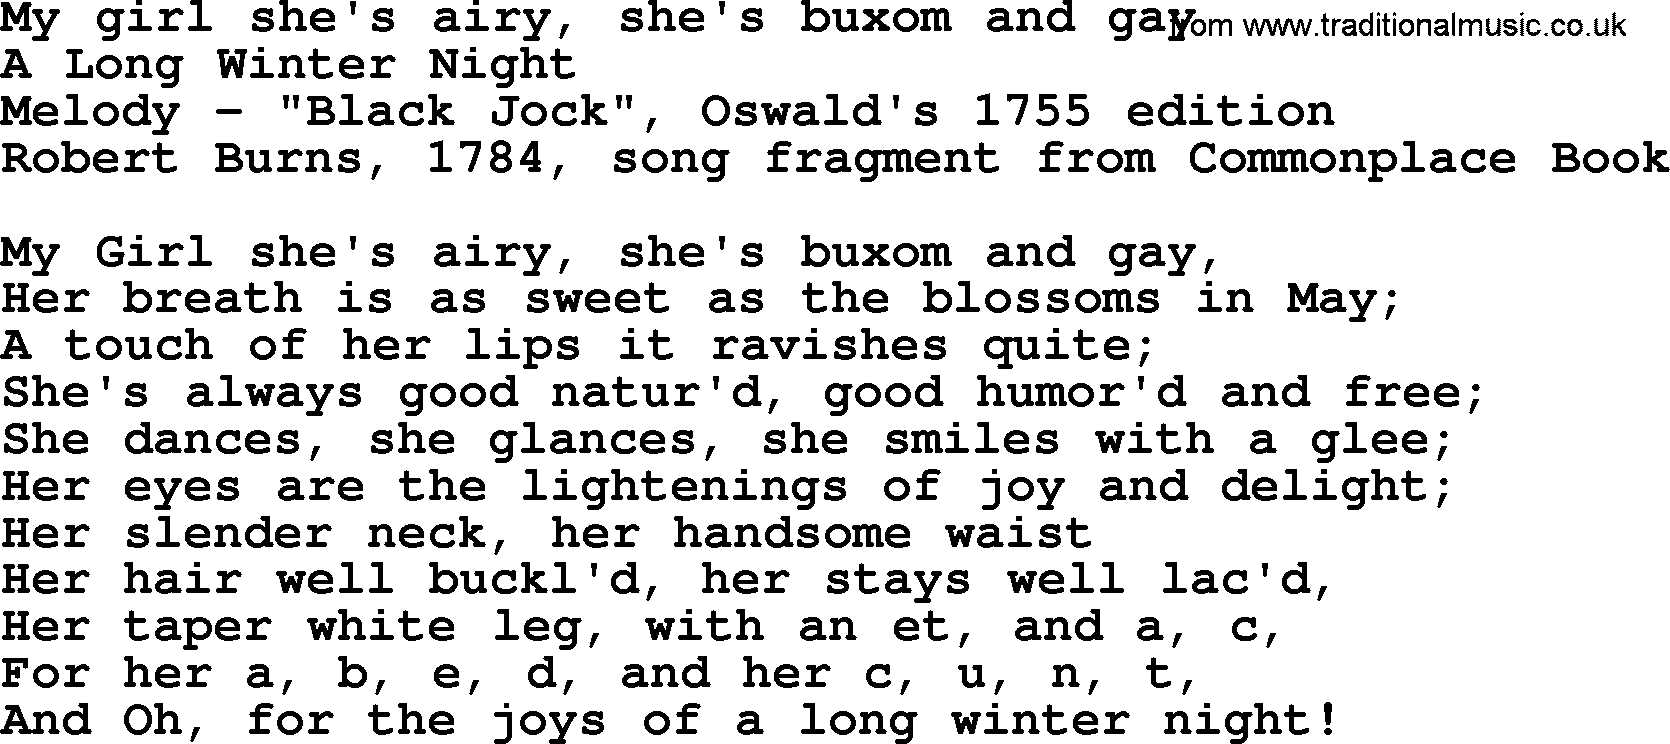 Robert Burns Songs & Lyrics: My Girl She's Airy, She's Buxom And Gay